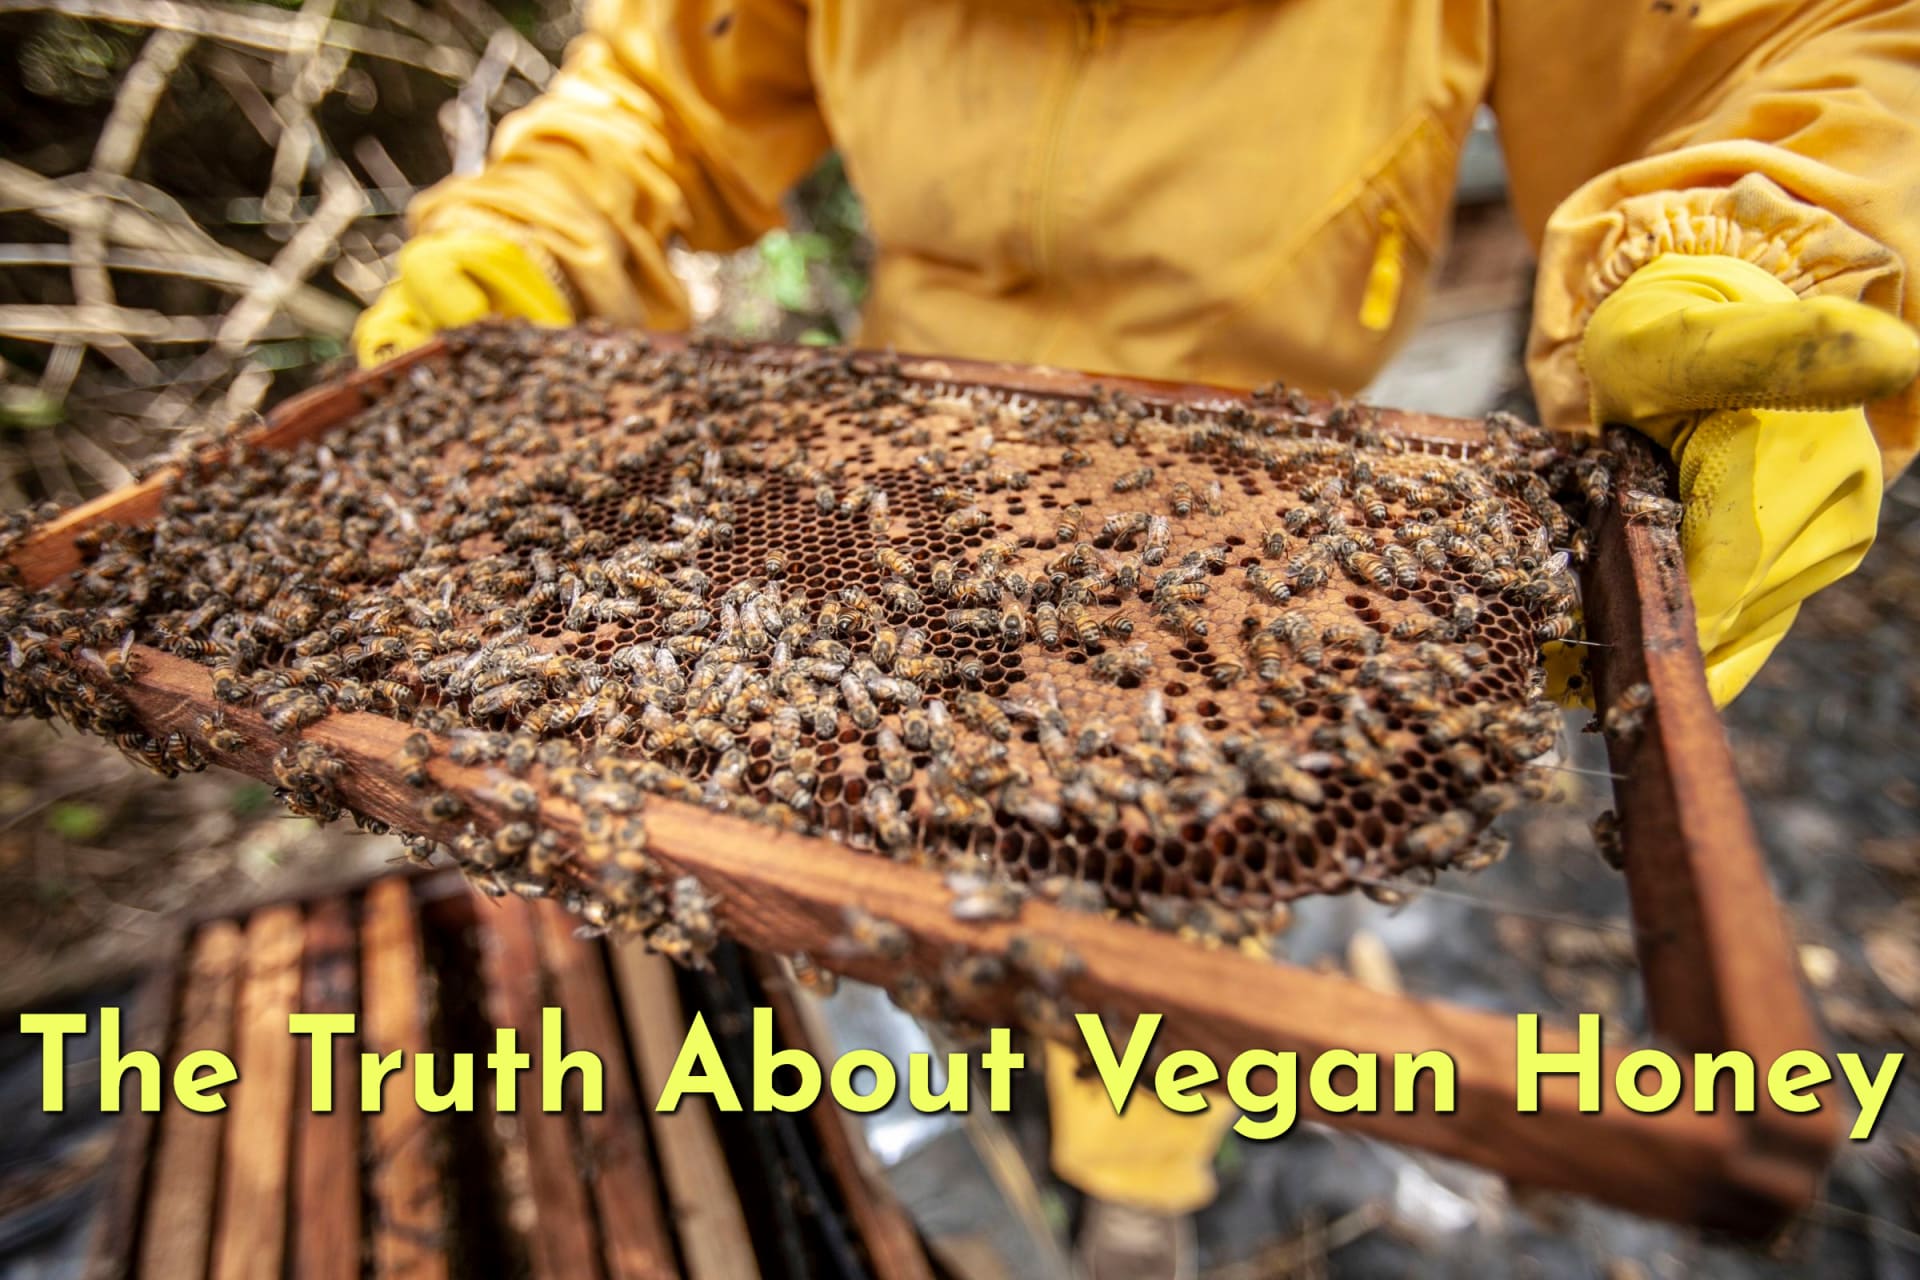 A beekeeper holding a honeycomb of vegan honey